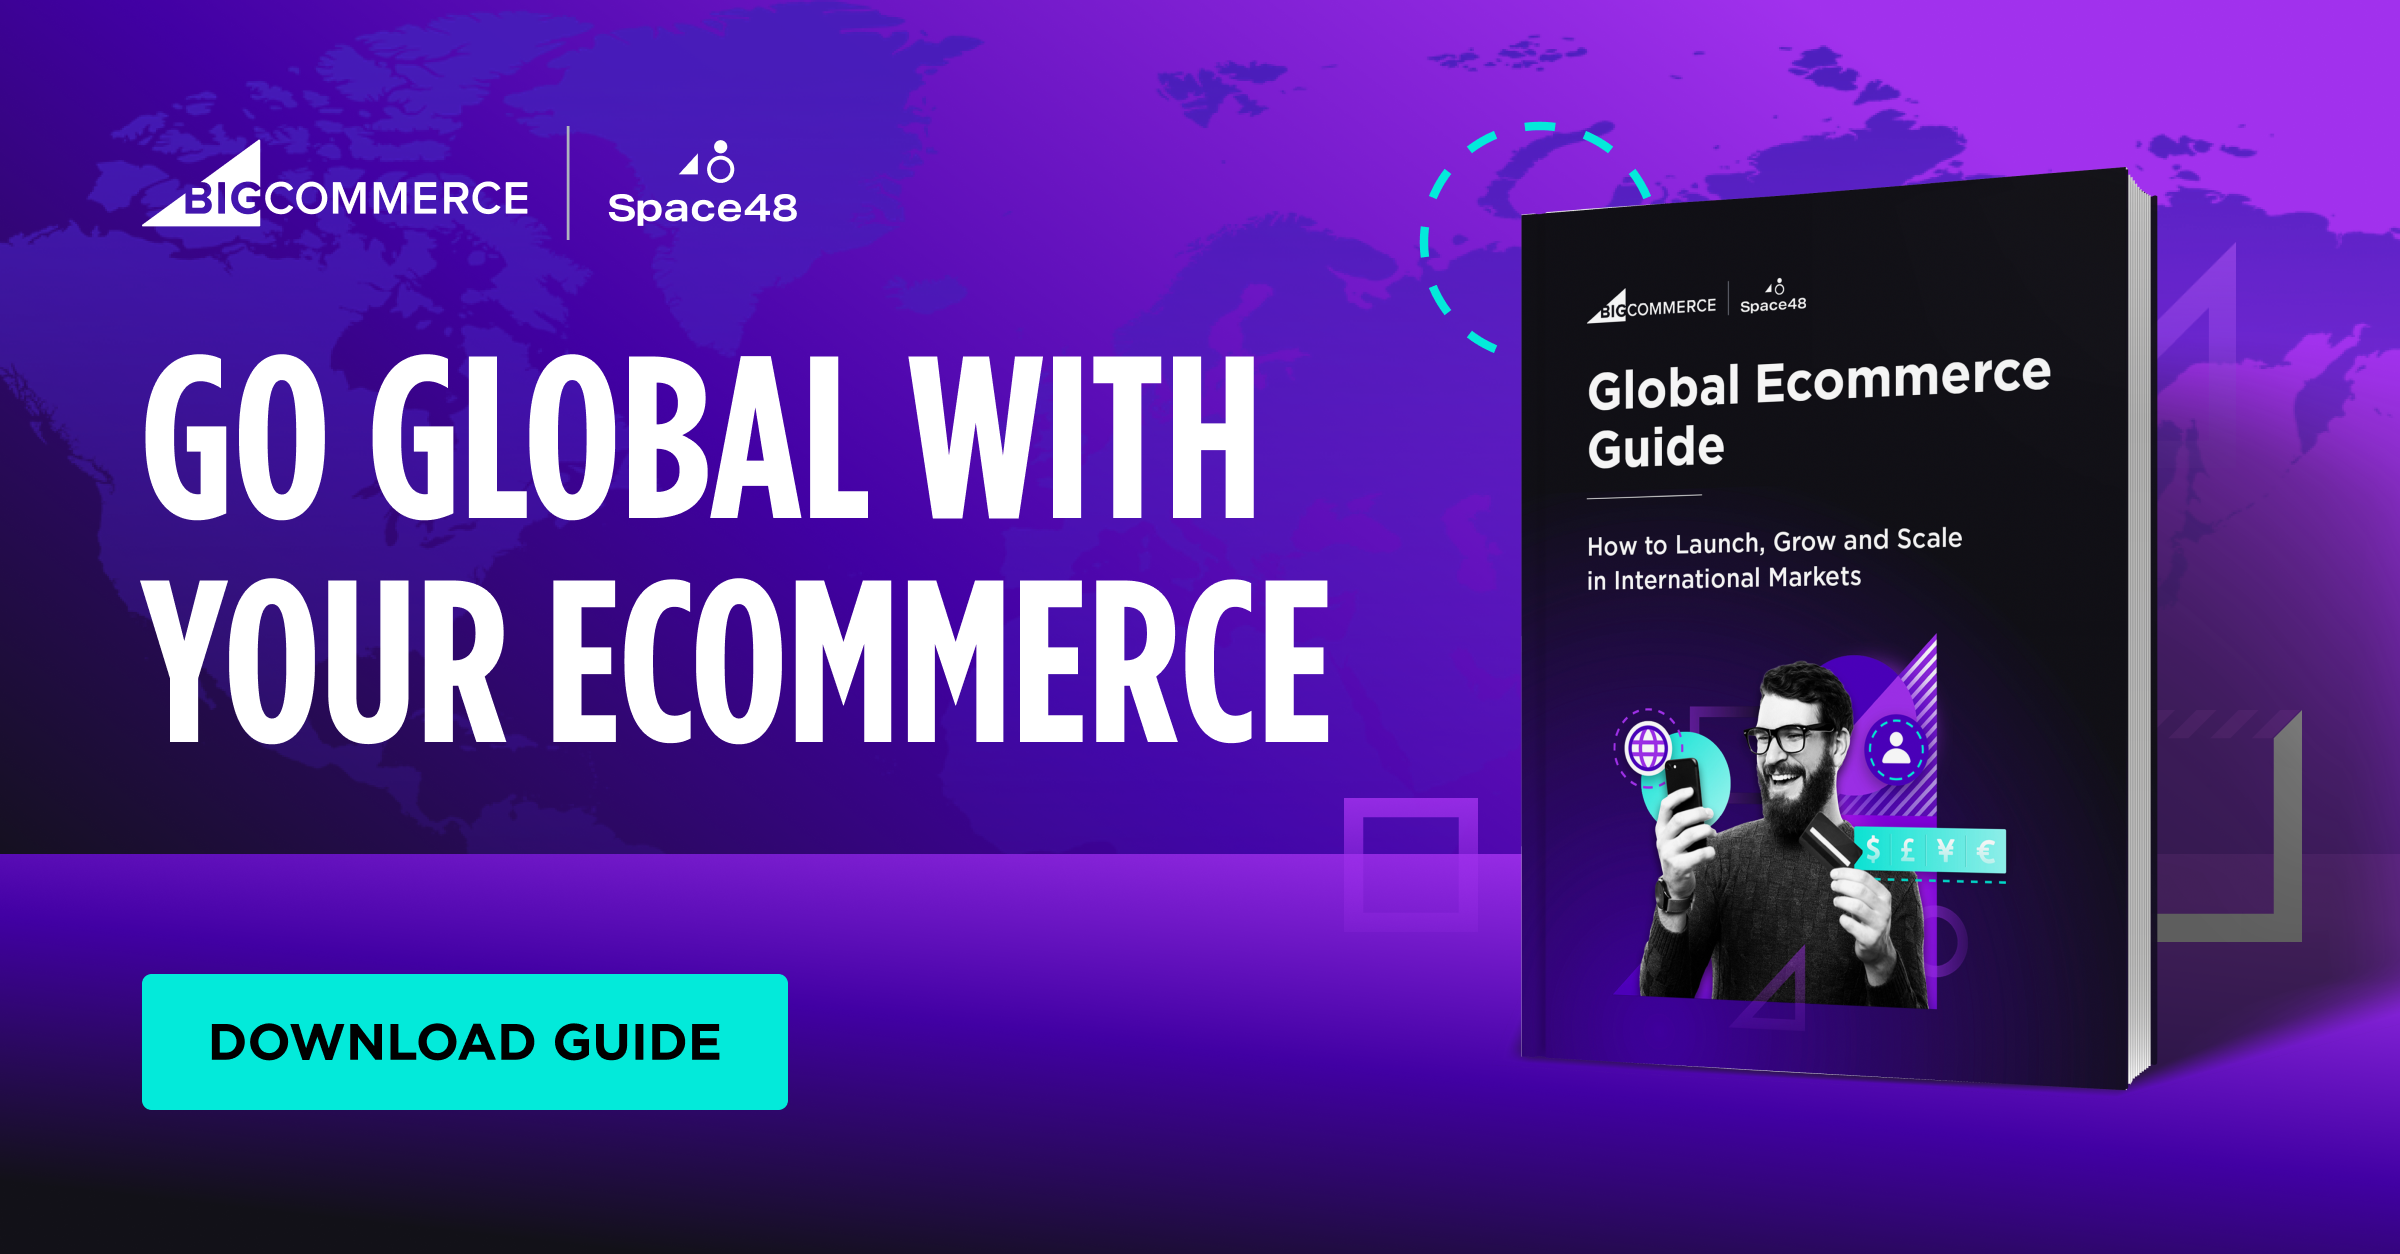 Global ecommerce guide